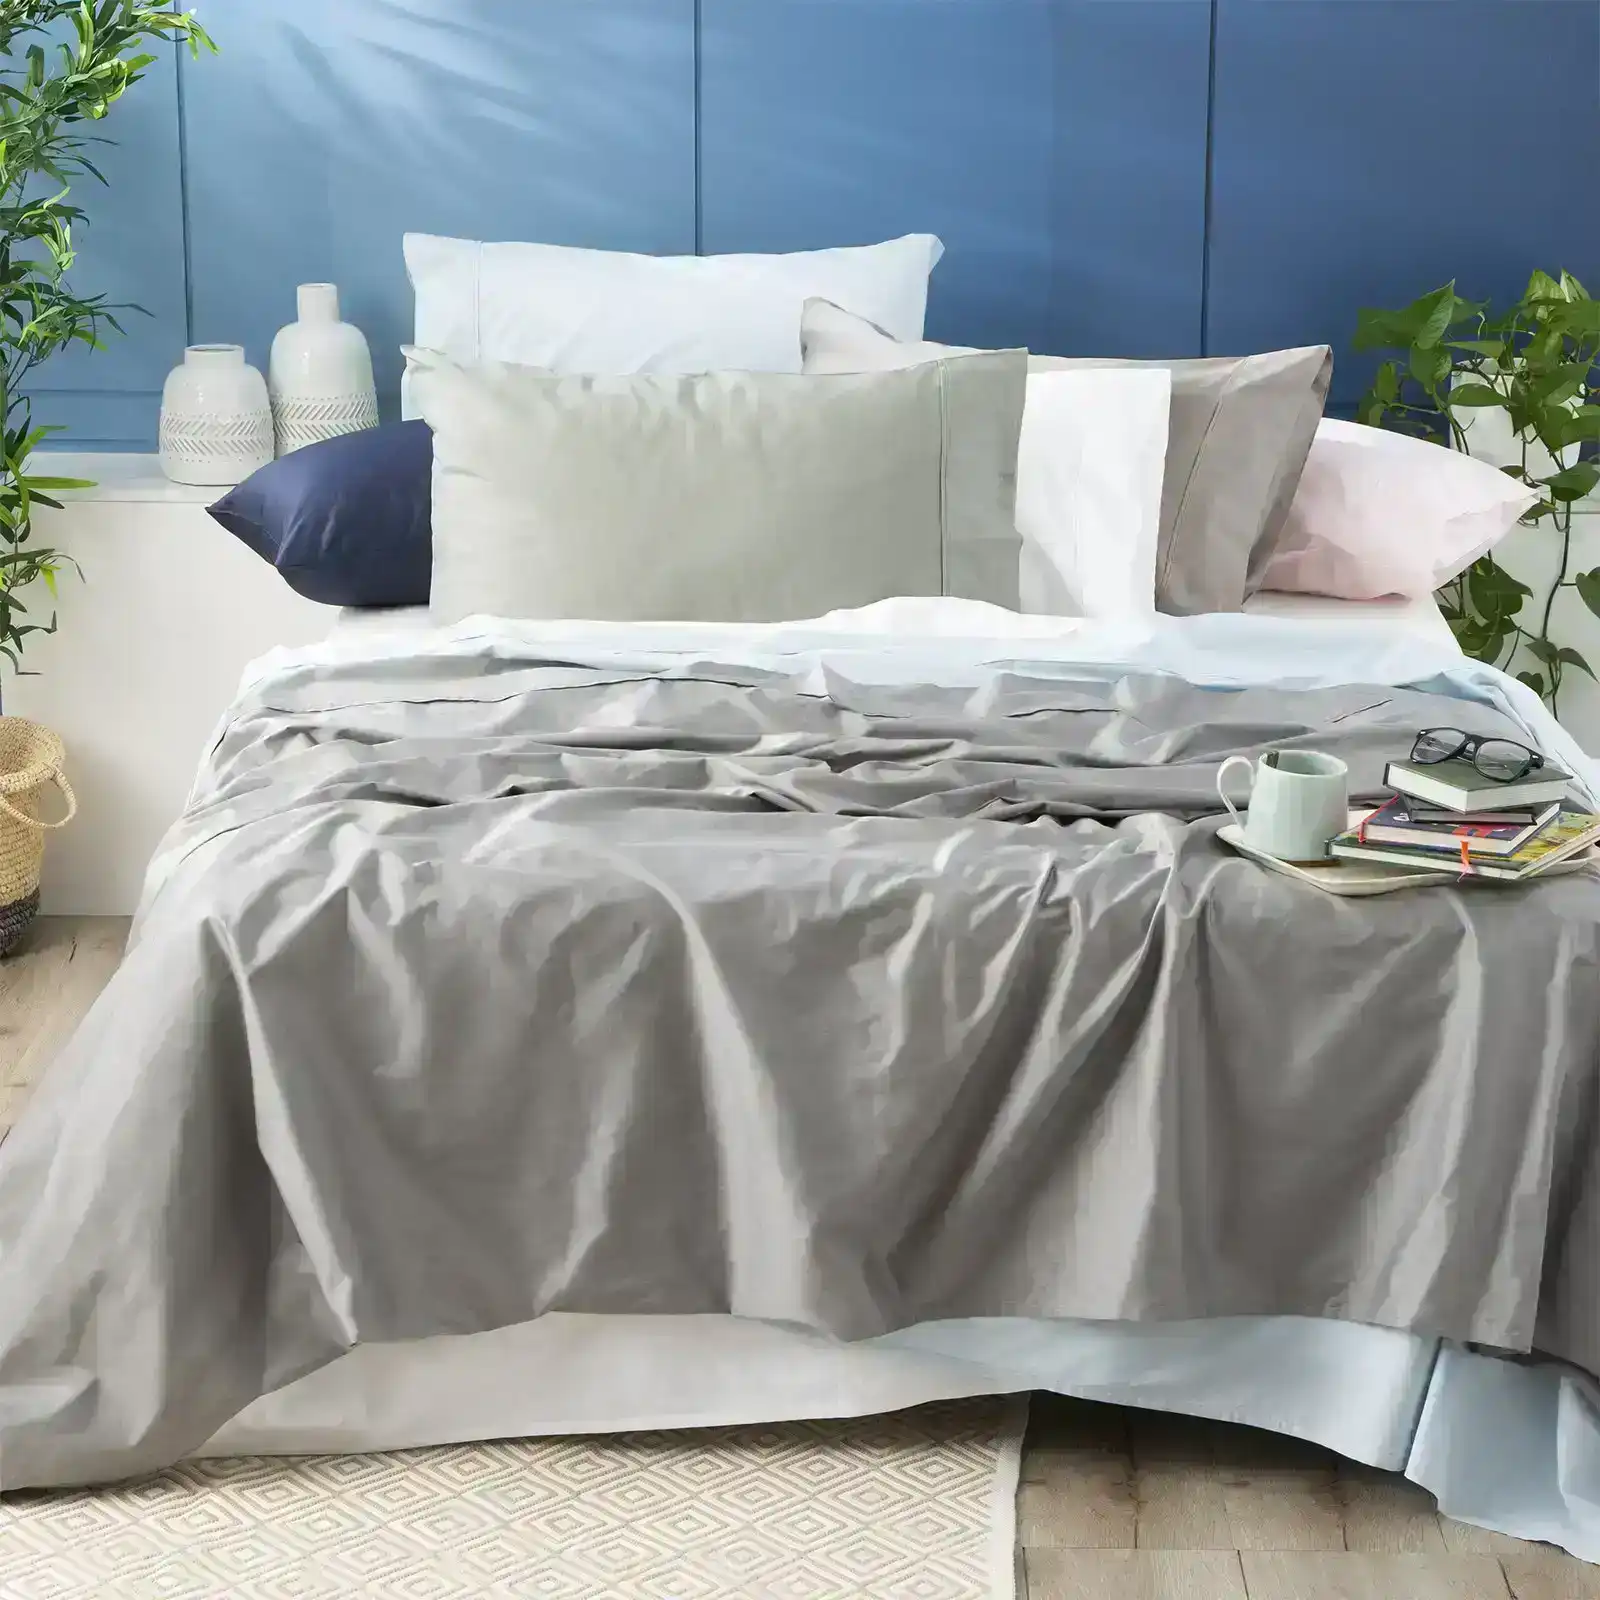 Park Avenue Super King Bed Sheet/Pillowcase 500TC Bamboo Cotton Bedding Peach